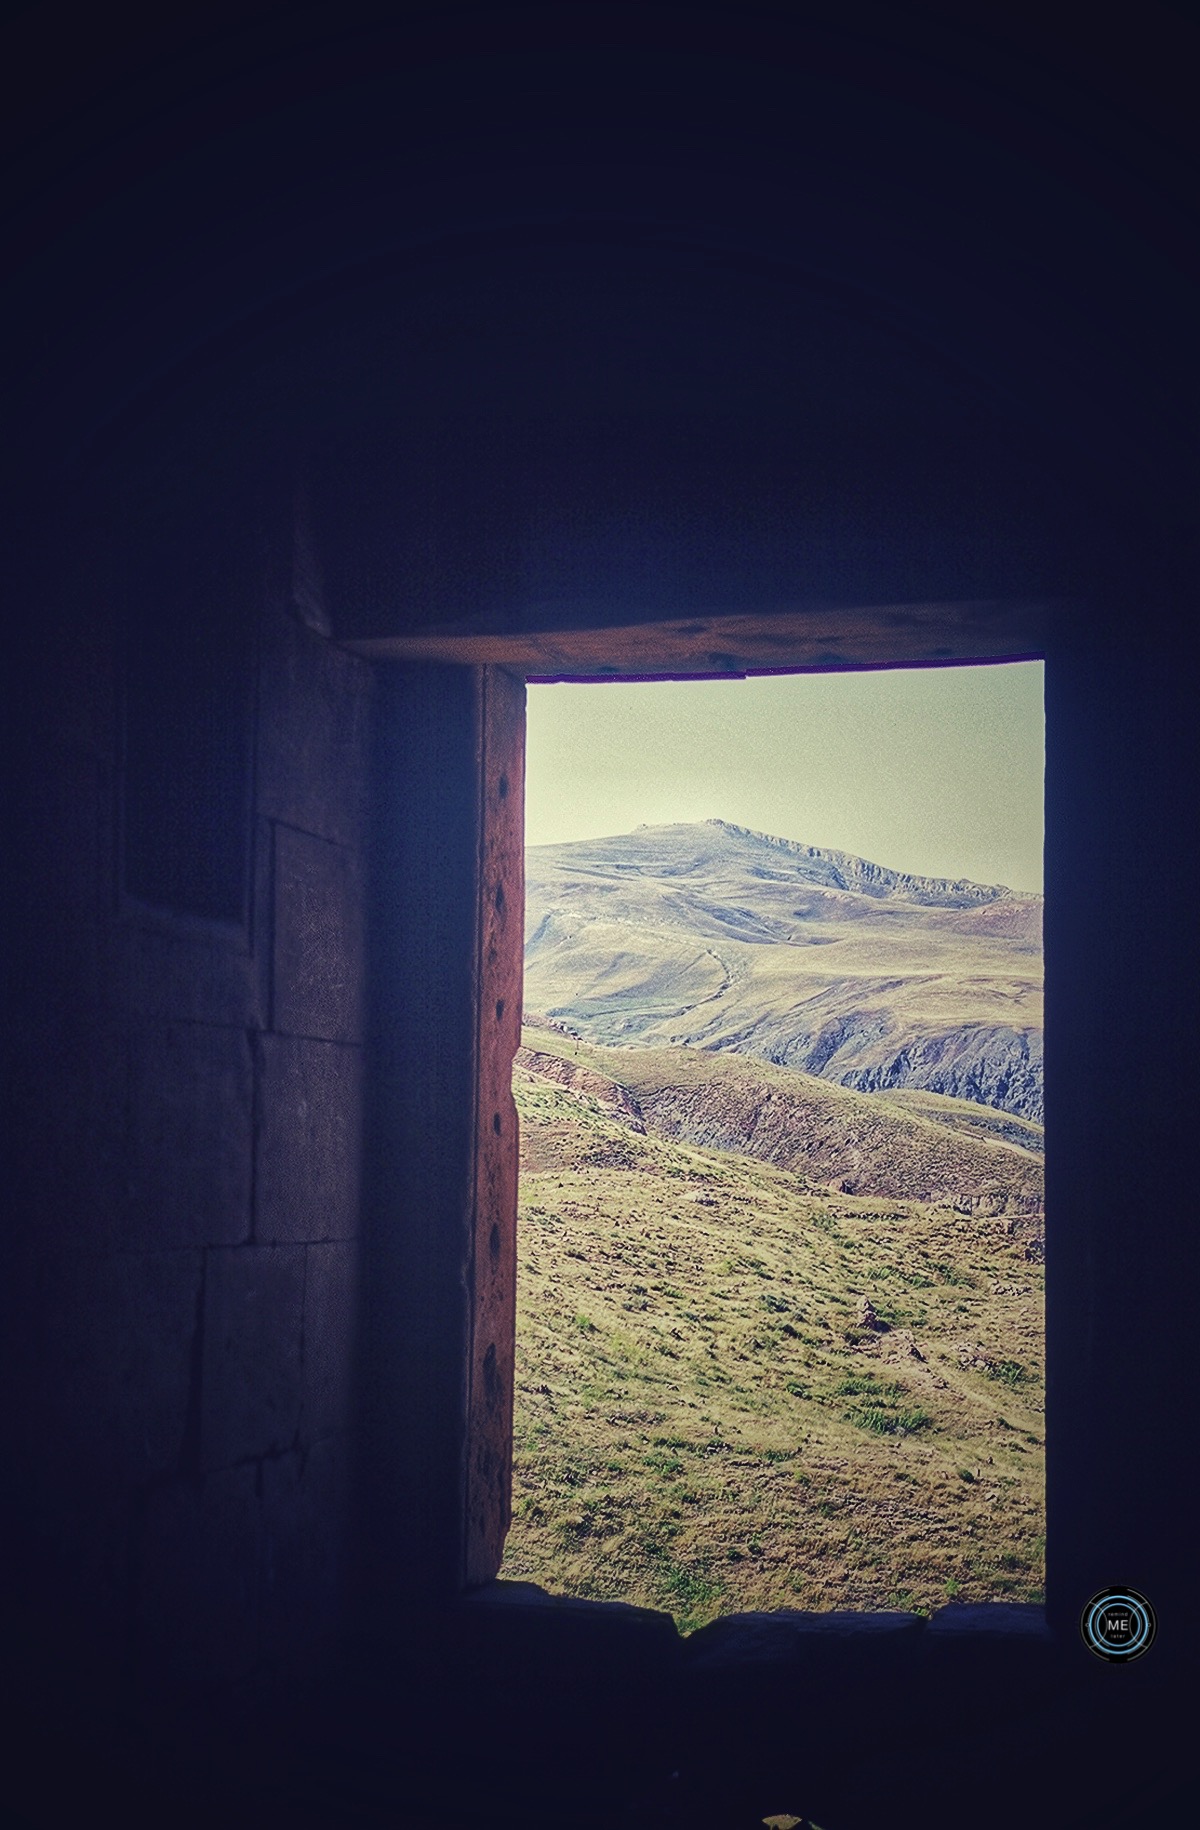 Ishak pasa sarayi,ภูเขา Ararat,เที่ยวตุรกีด้วยตัวเอง,Ararat,Dogubayazit,Remind me later traveling